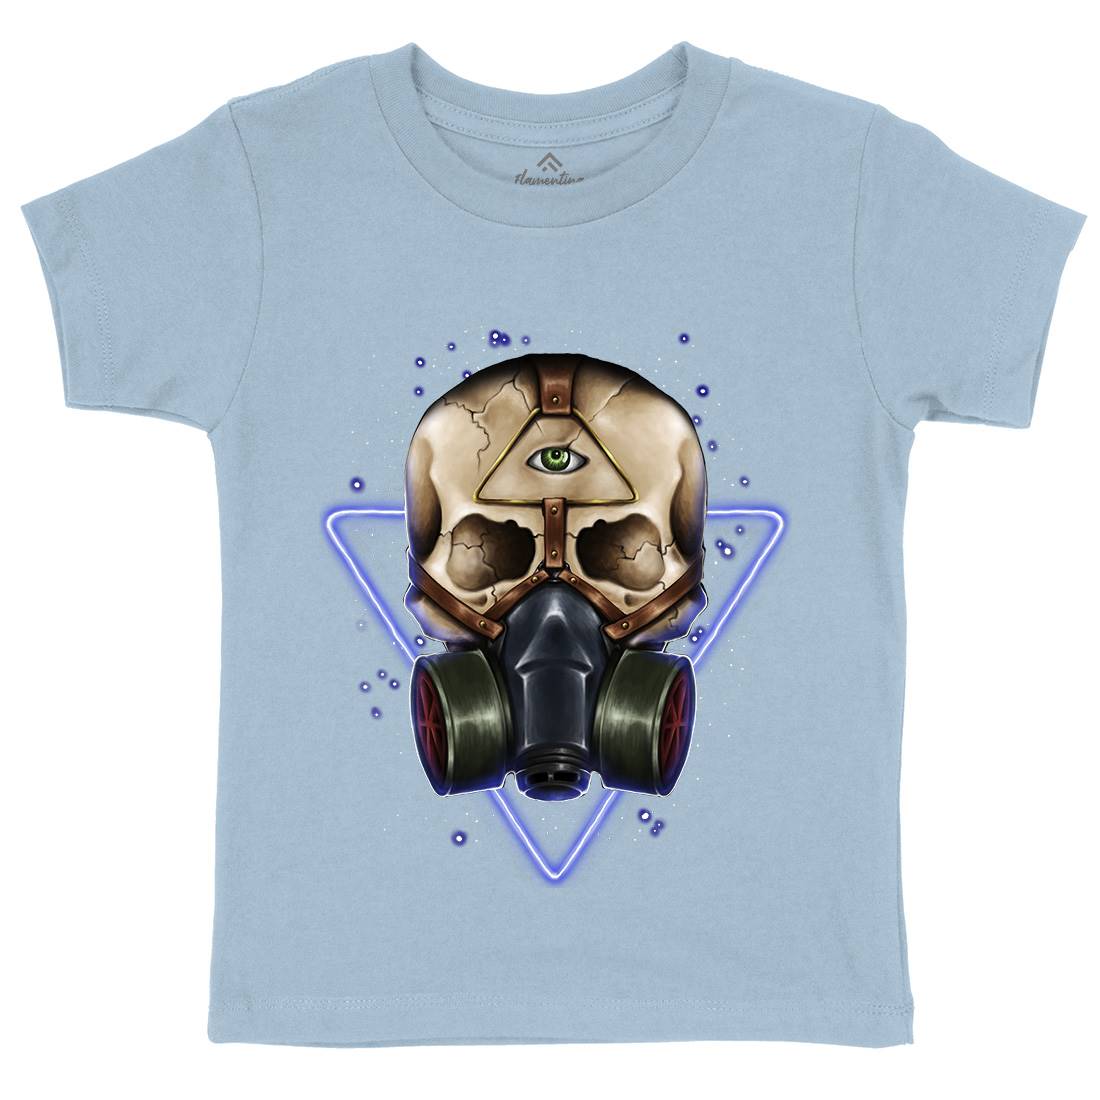 Toxic Galaxy Kids Crew Neck T-Shirt Space A486